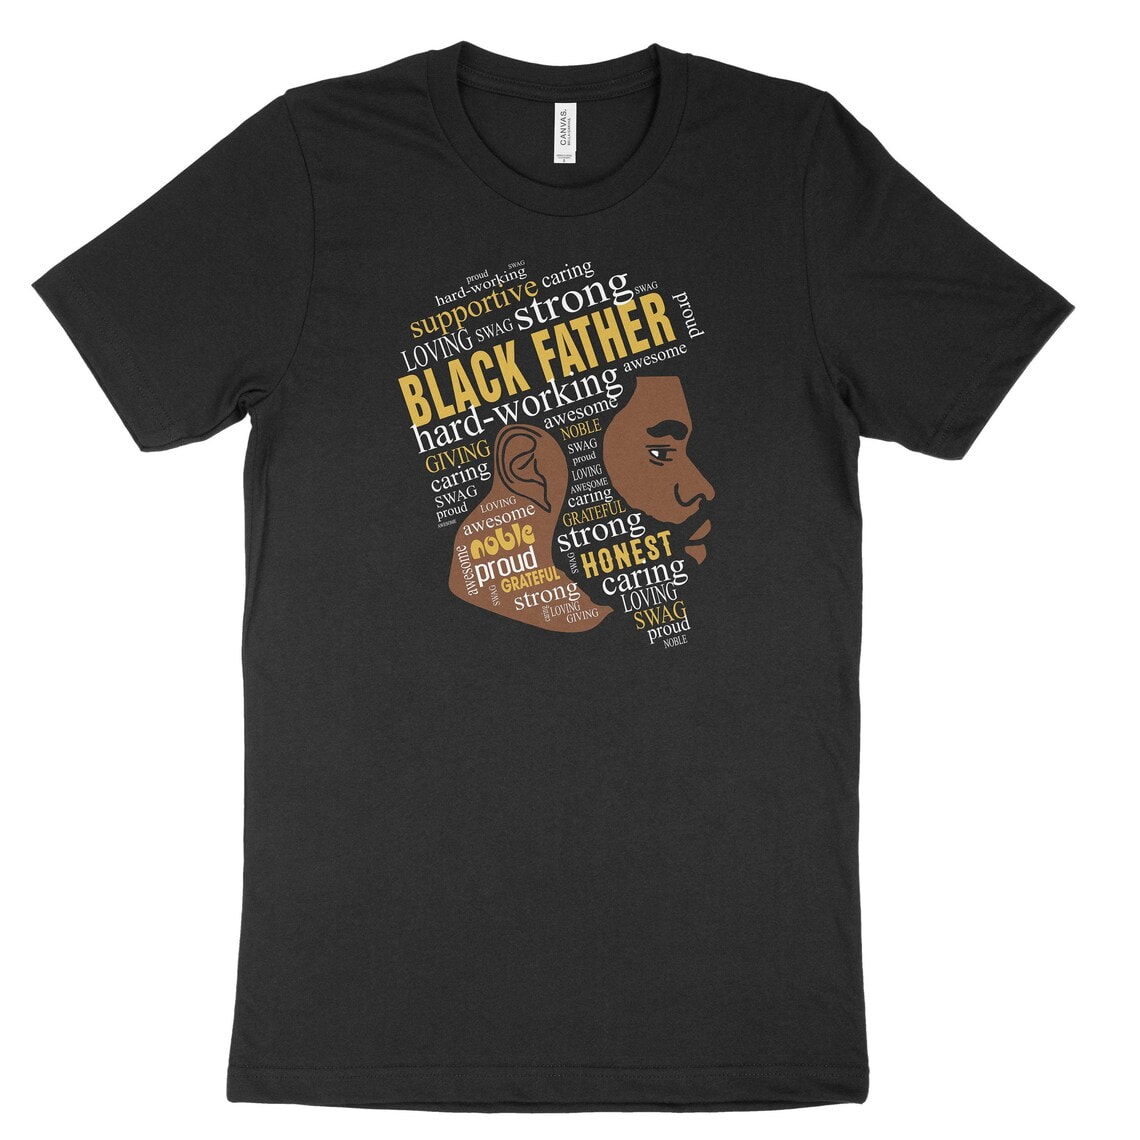 Black Father Shirt, Black Lives Matter